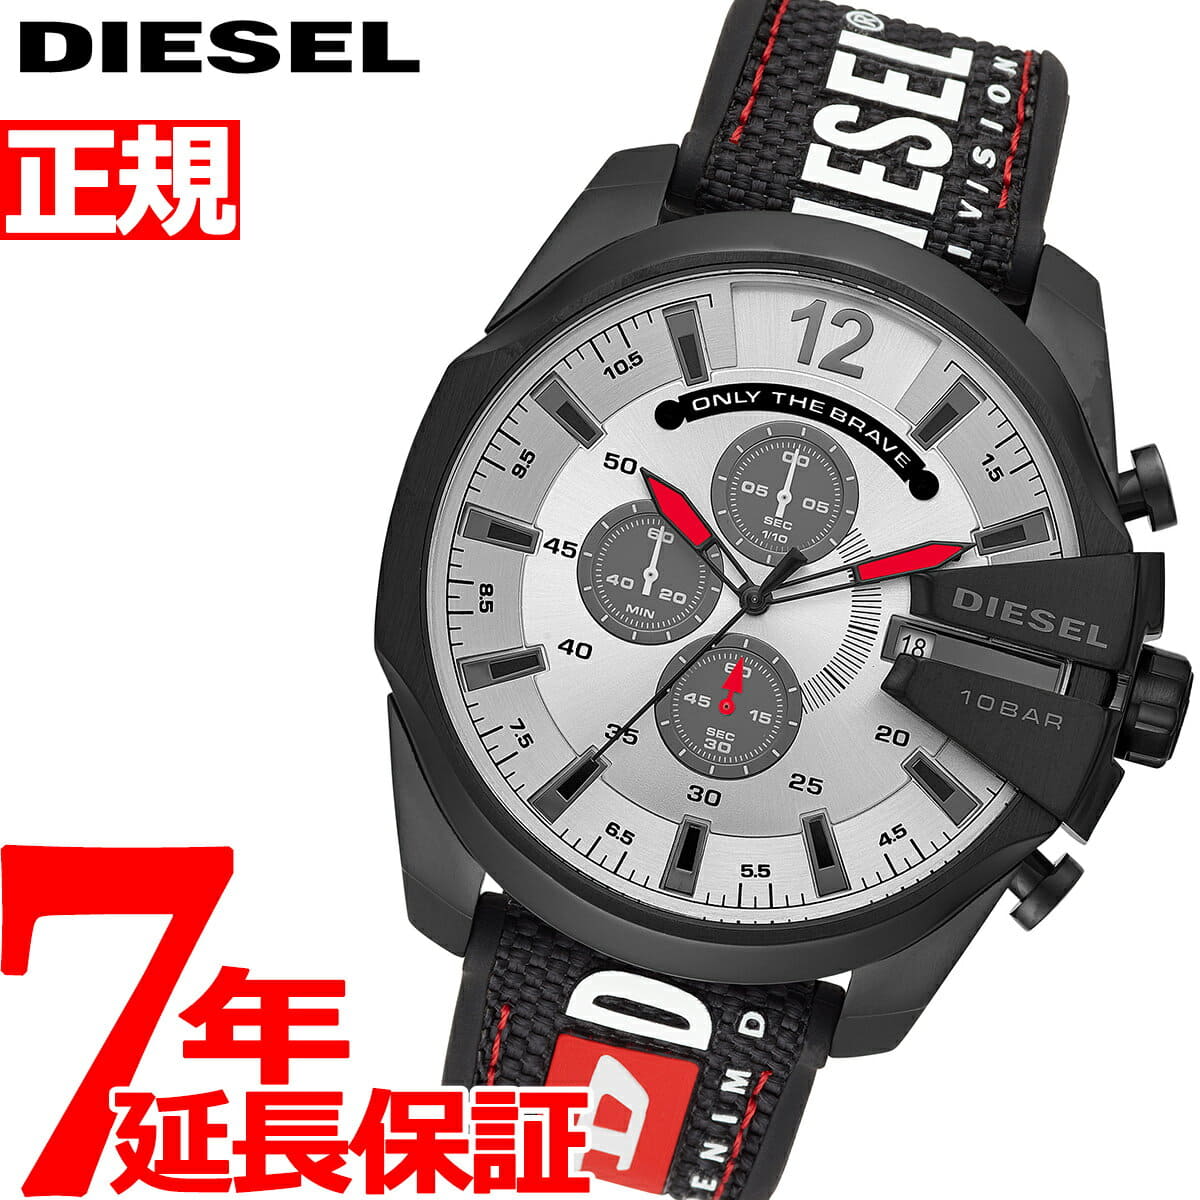 MEGA - mega DIESEL DZ4512 new [2019 watch works] CHIEF BE men chronograph FORWARD chief New]Diesel Store